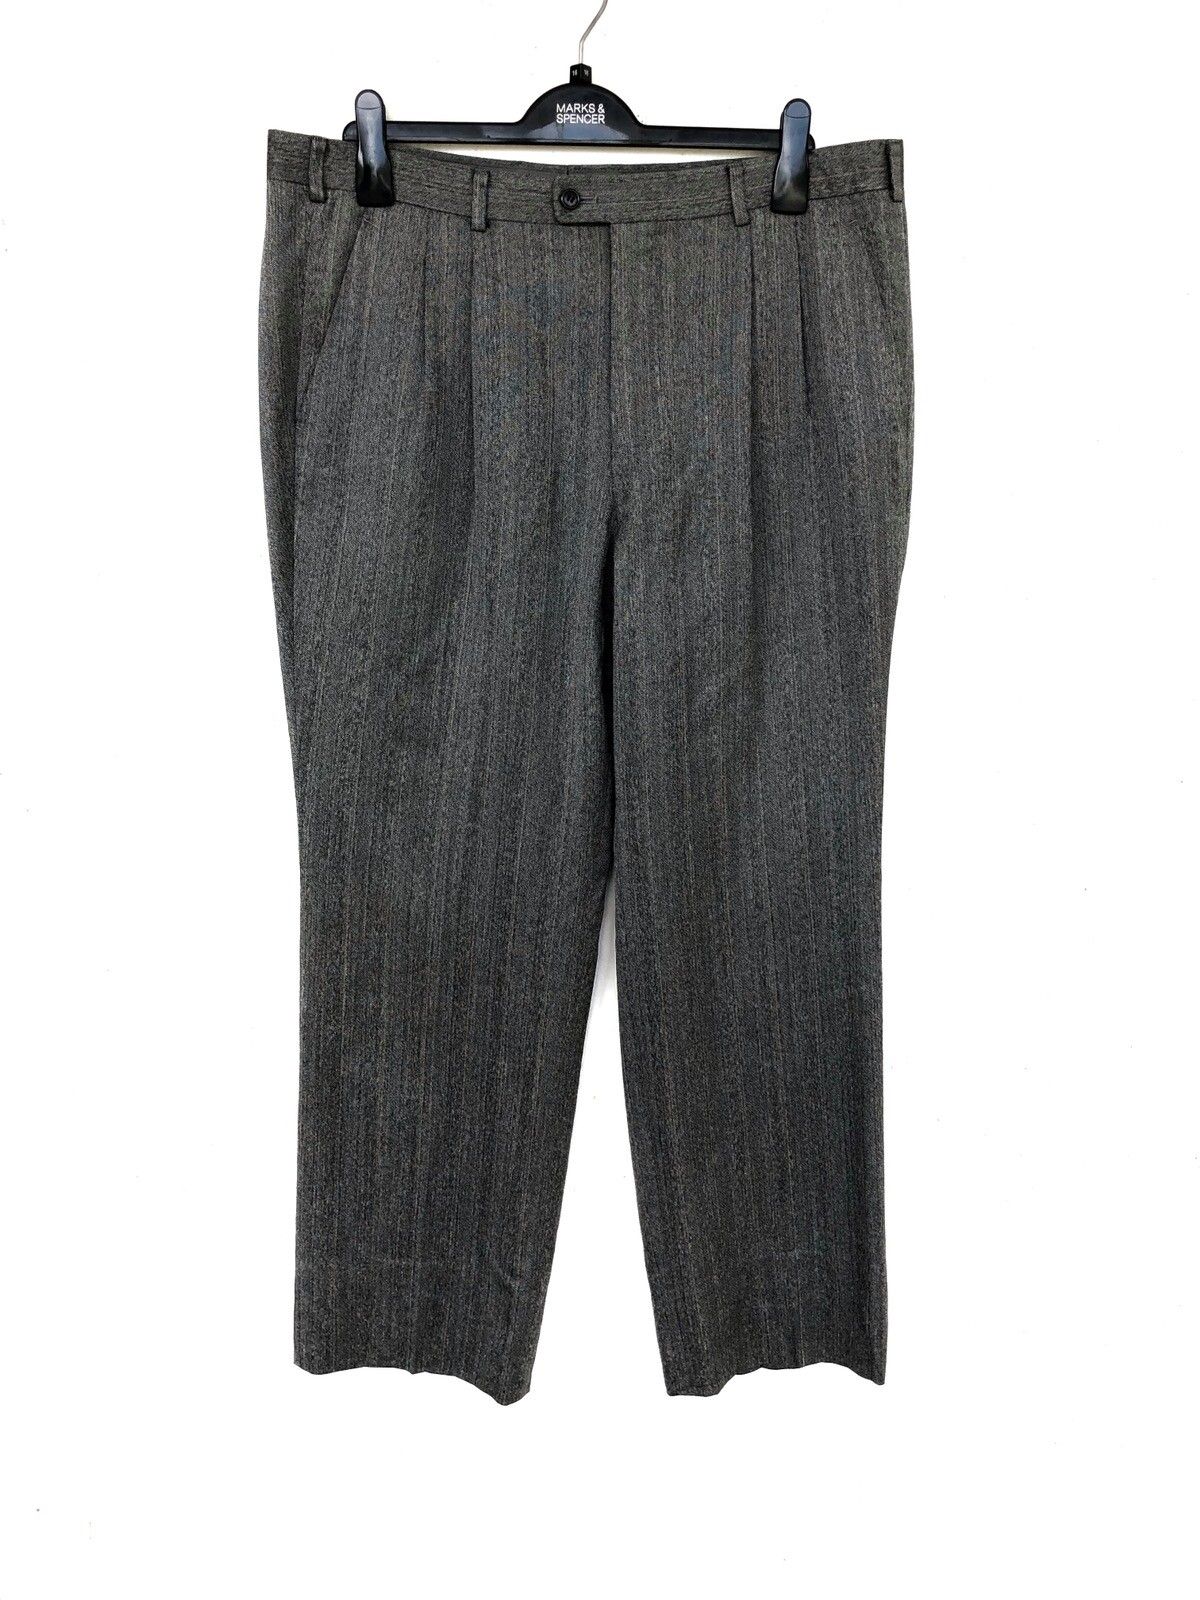 Lanvin GRAIL🔥Lanvin Paris Grey Striped Wool Oversized Baggy Pants Size US 38 / EU 54 - 2 Preview